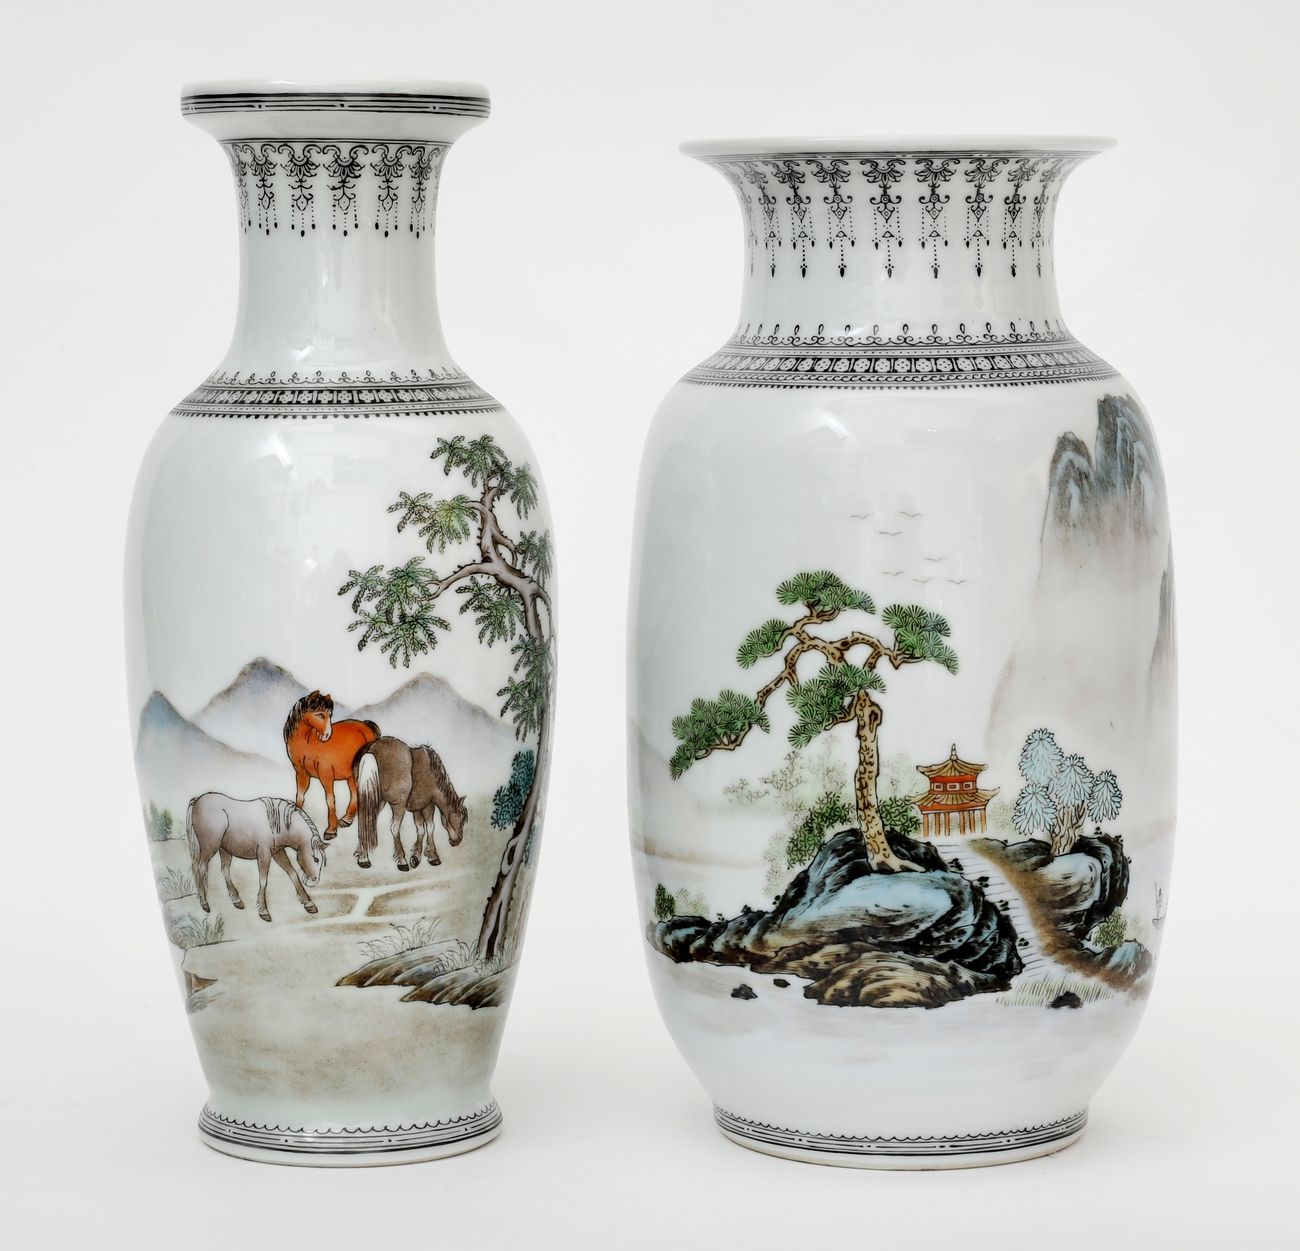 Null 中国，民国时期(1912-1949)
两只以法米勒珐琅彩装饰的山水和马匹的瓷器花瓶。
高度：26厘米和24厘米